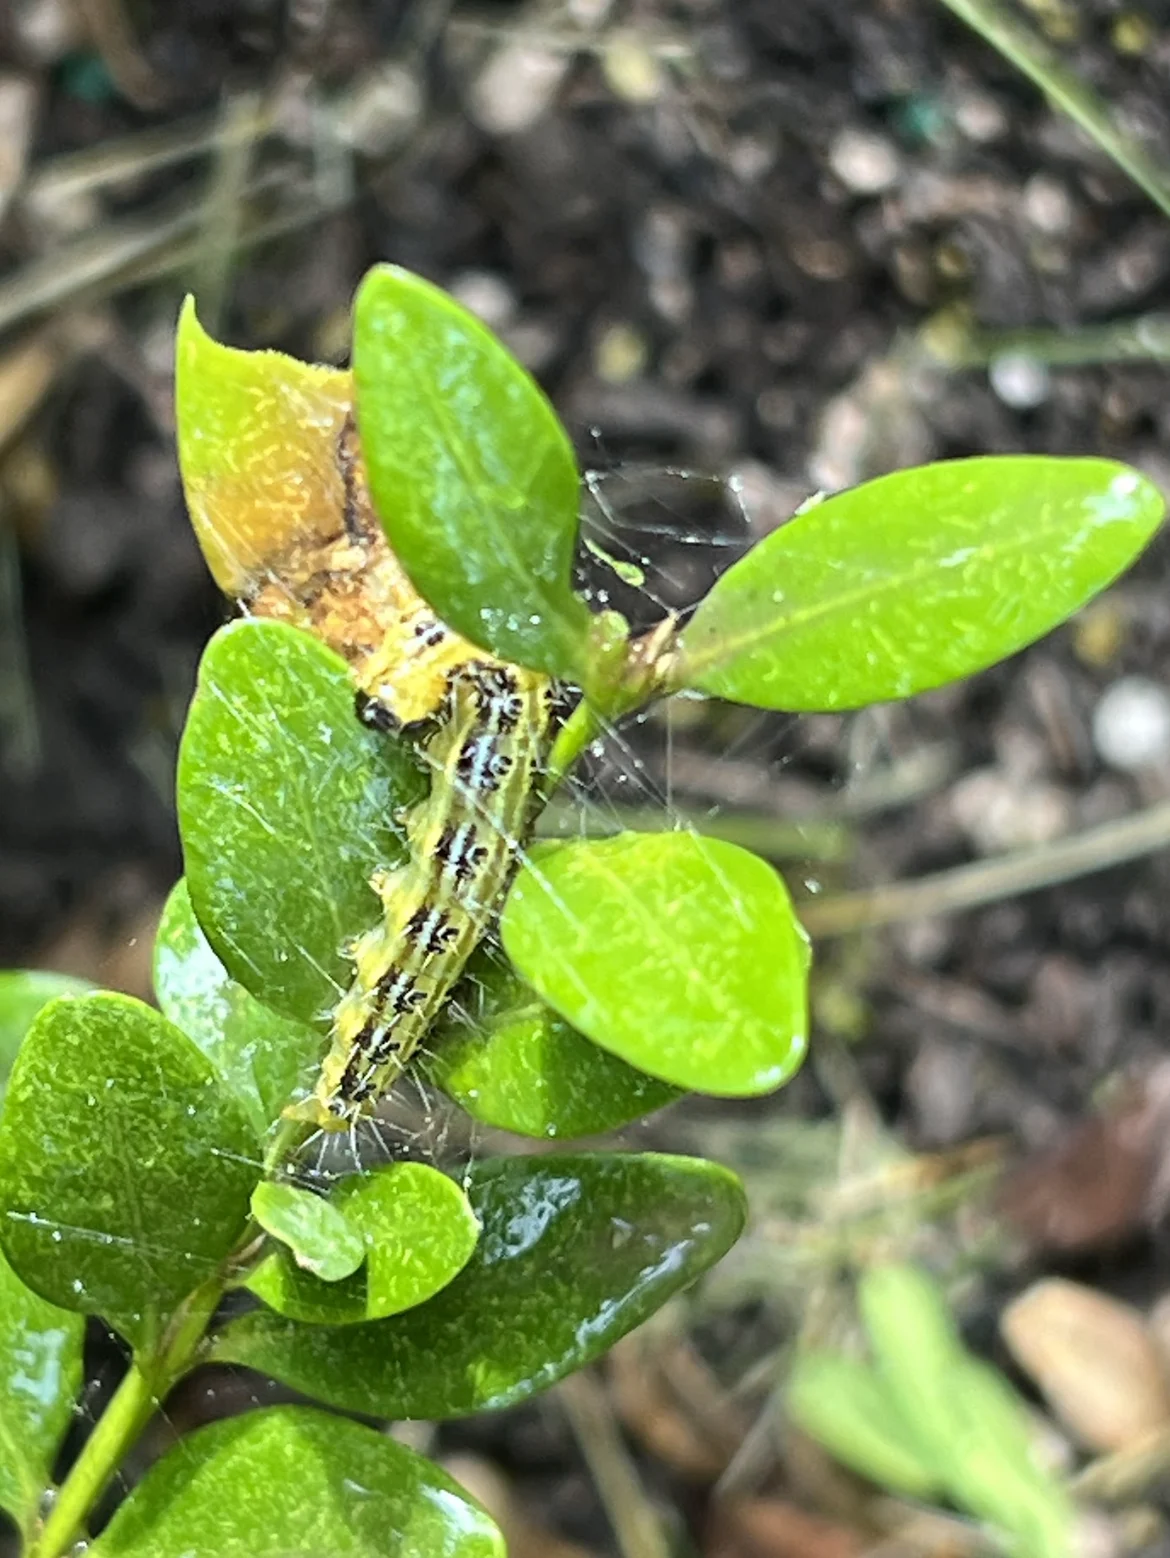 Landscape Ontario: Mature larva getting ready to pupate